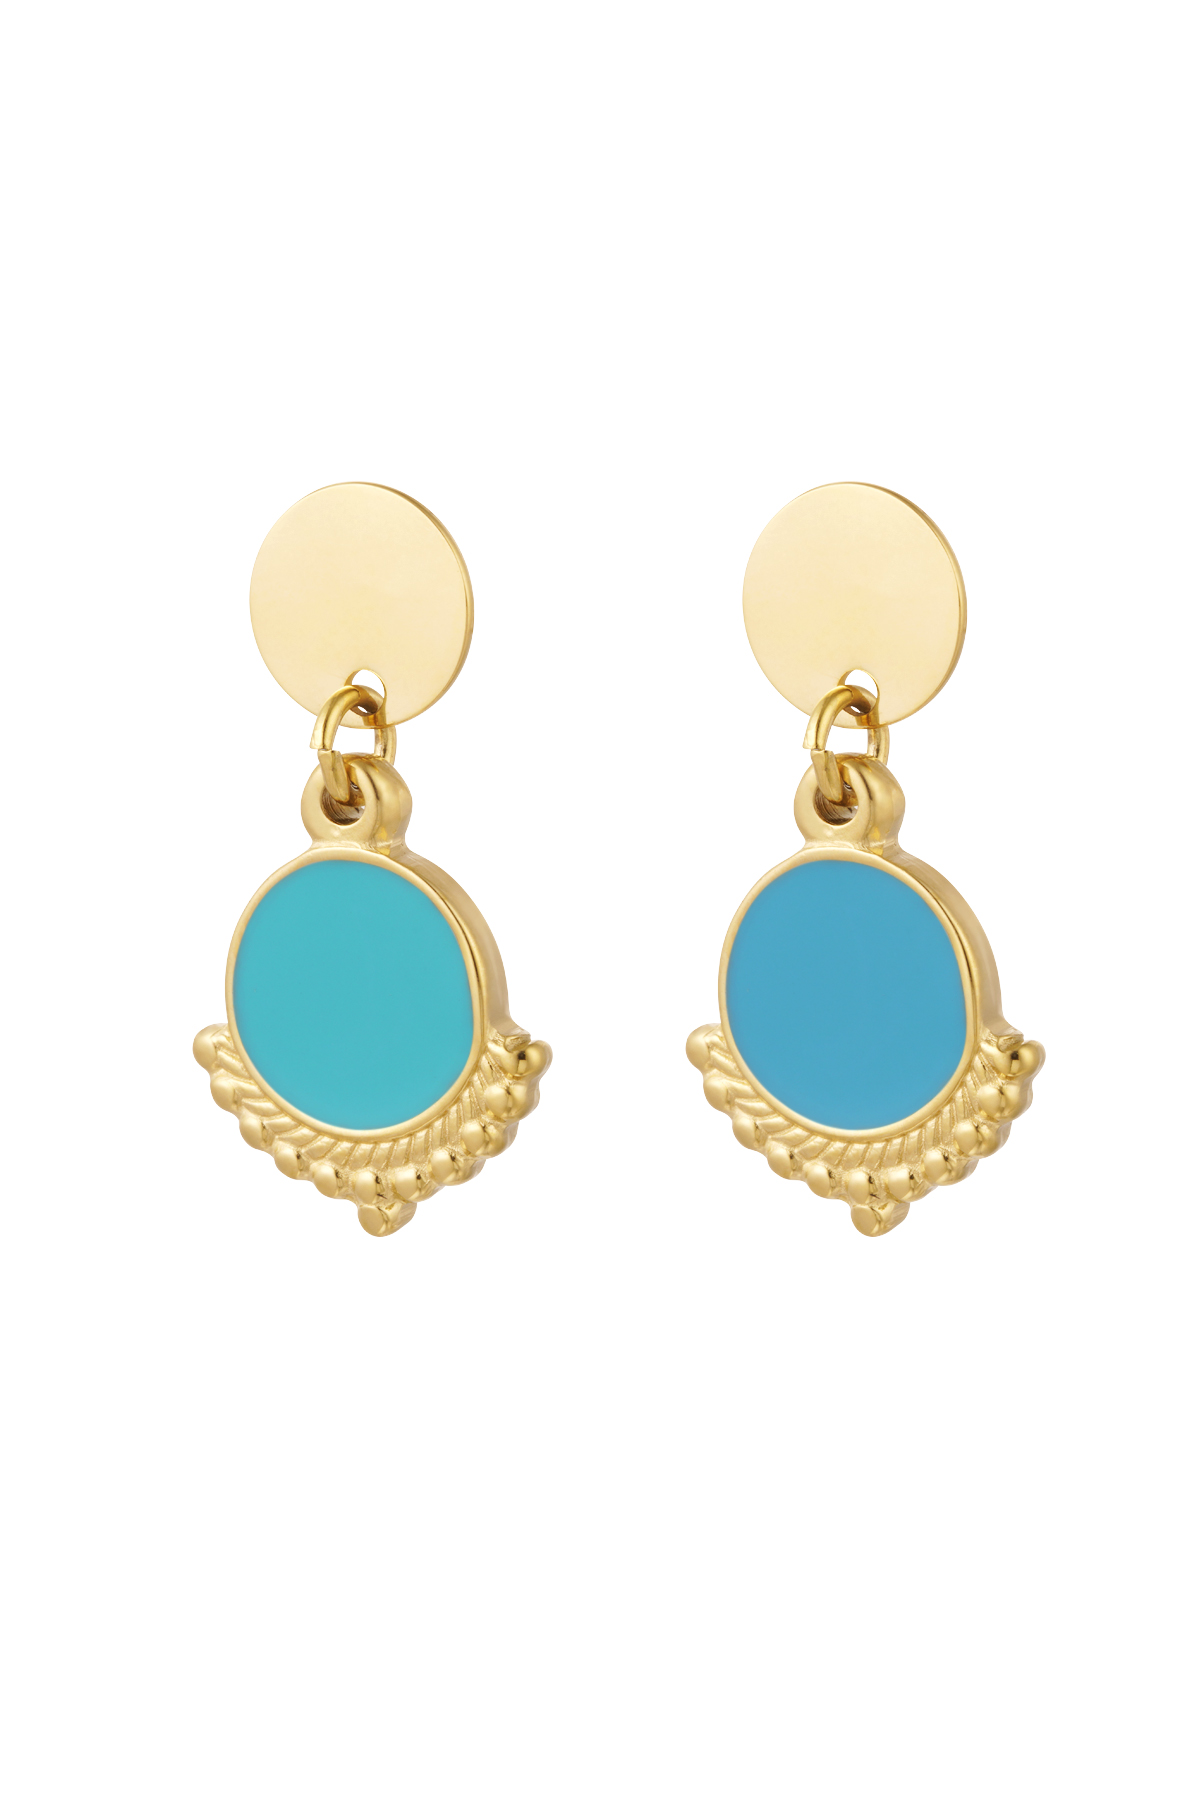 Ohrringe elegant mit Farbe - Gold/Blau h5 